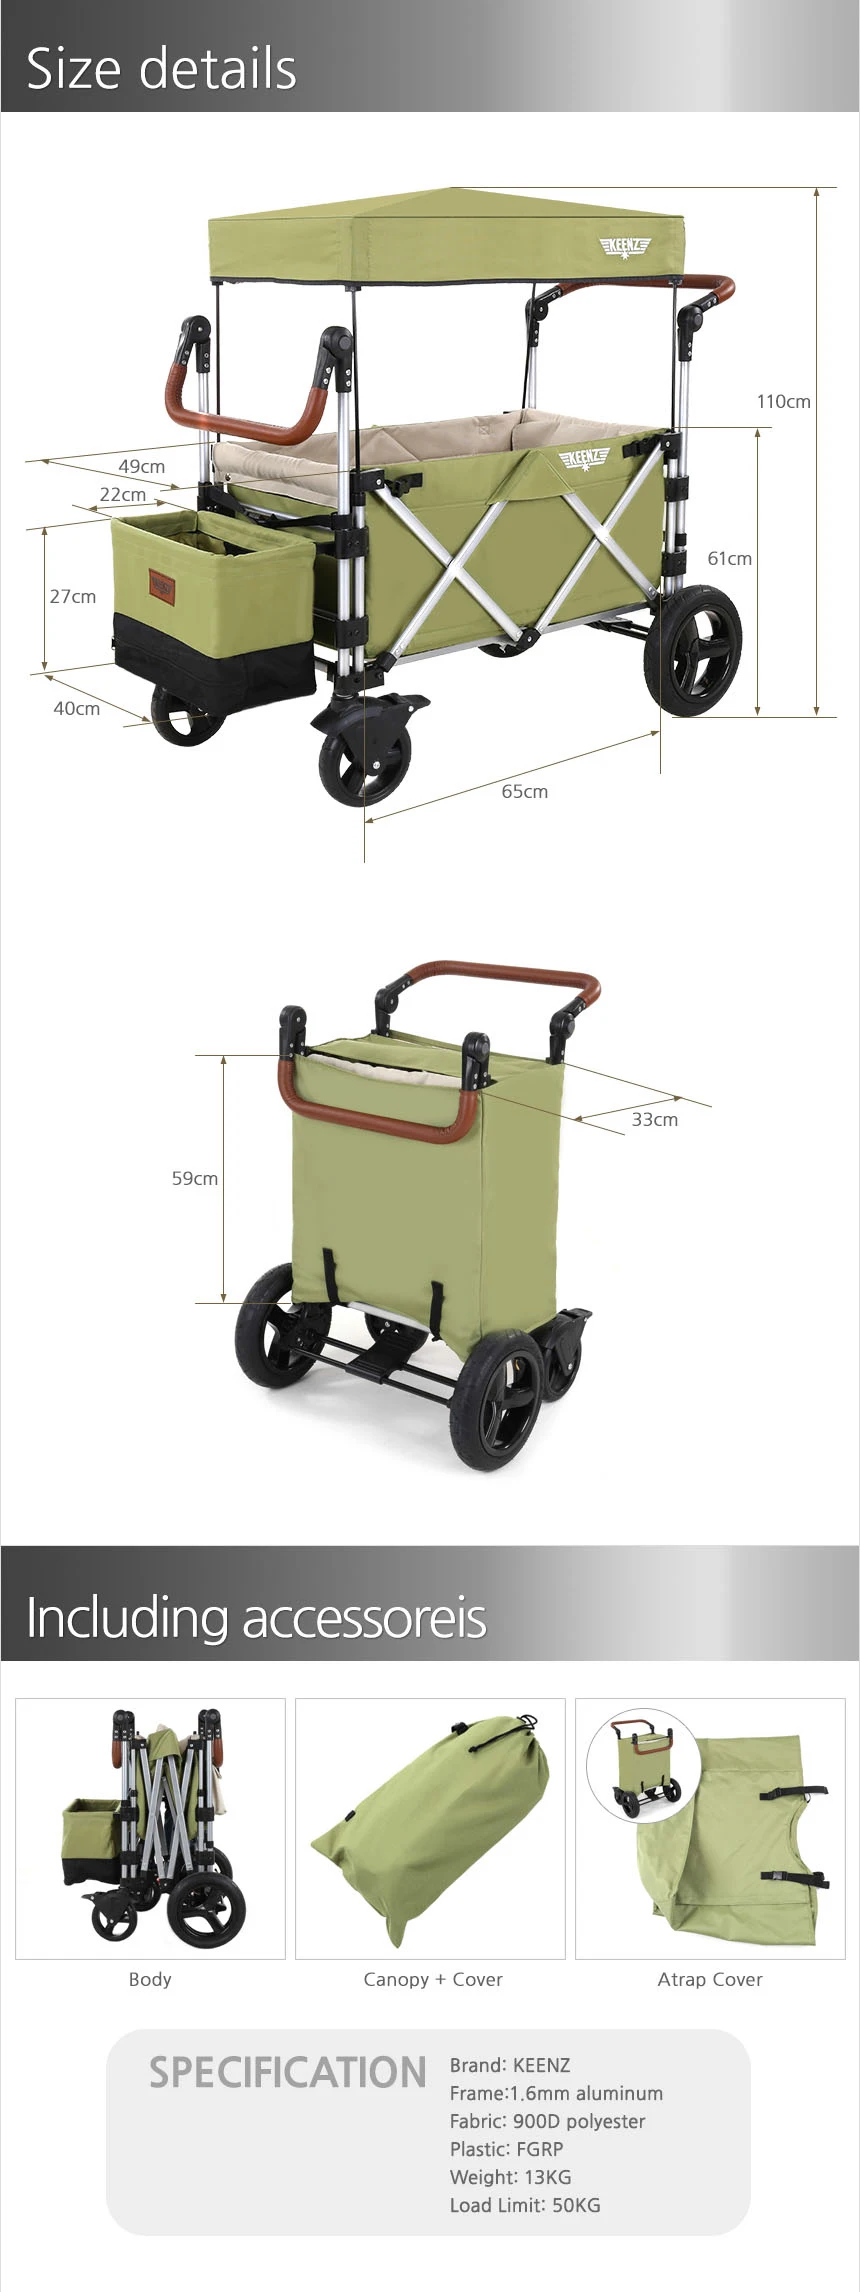 keenz stroller dimensions